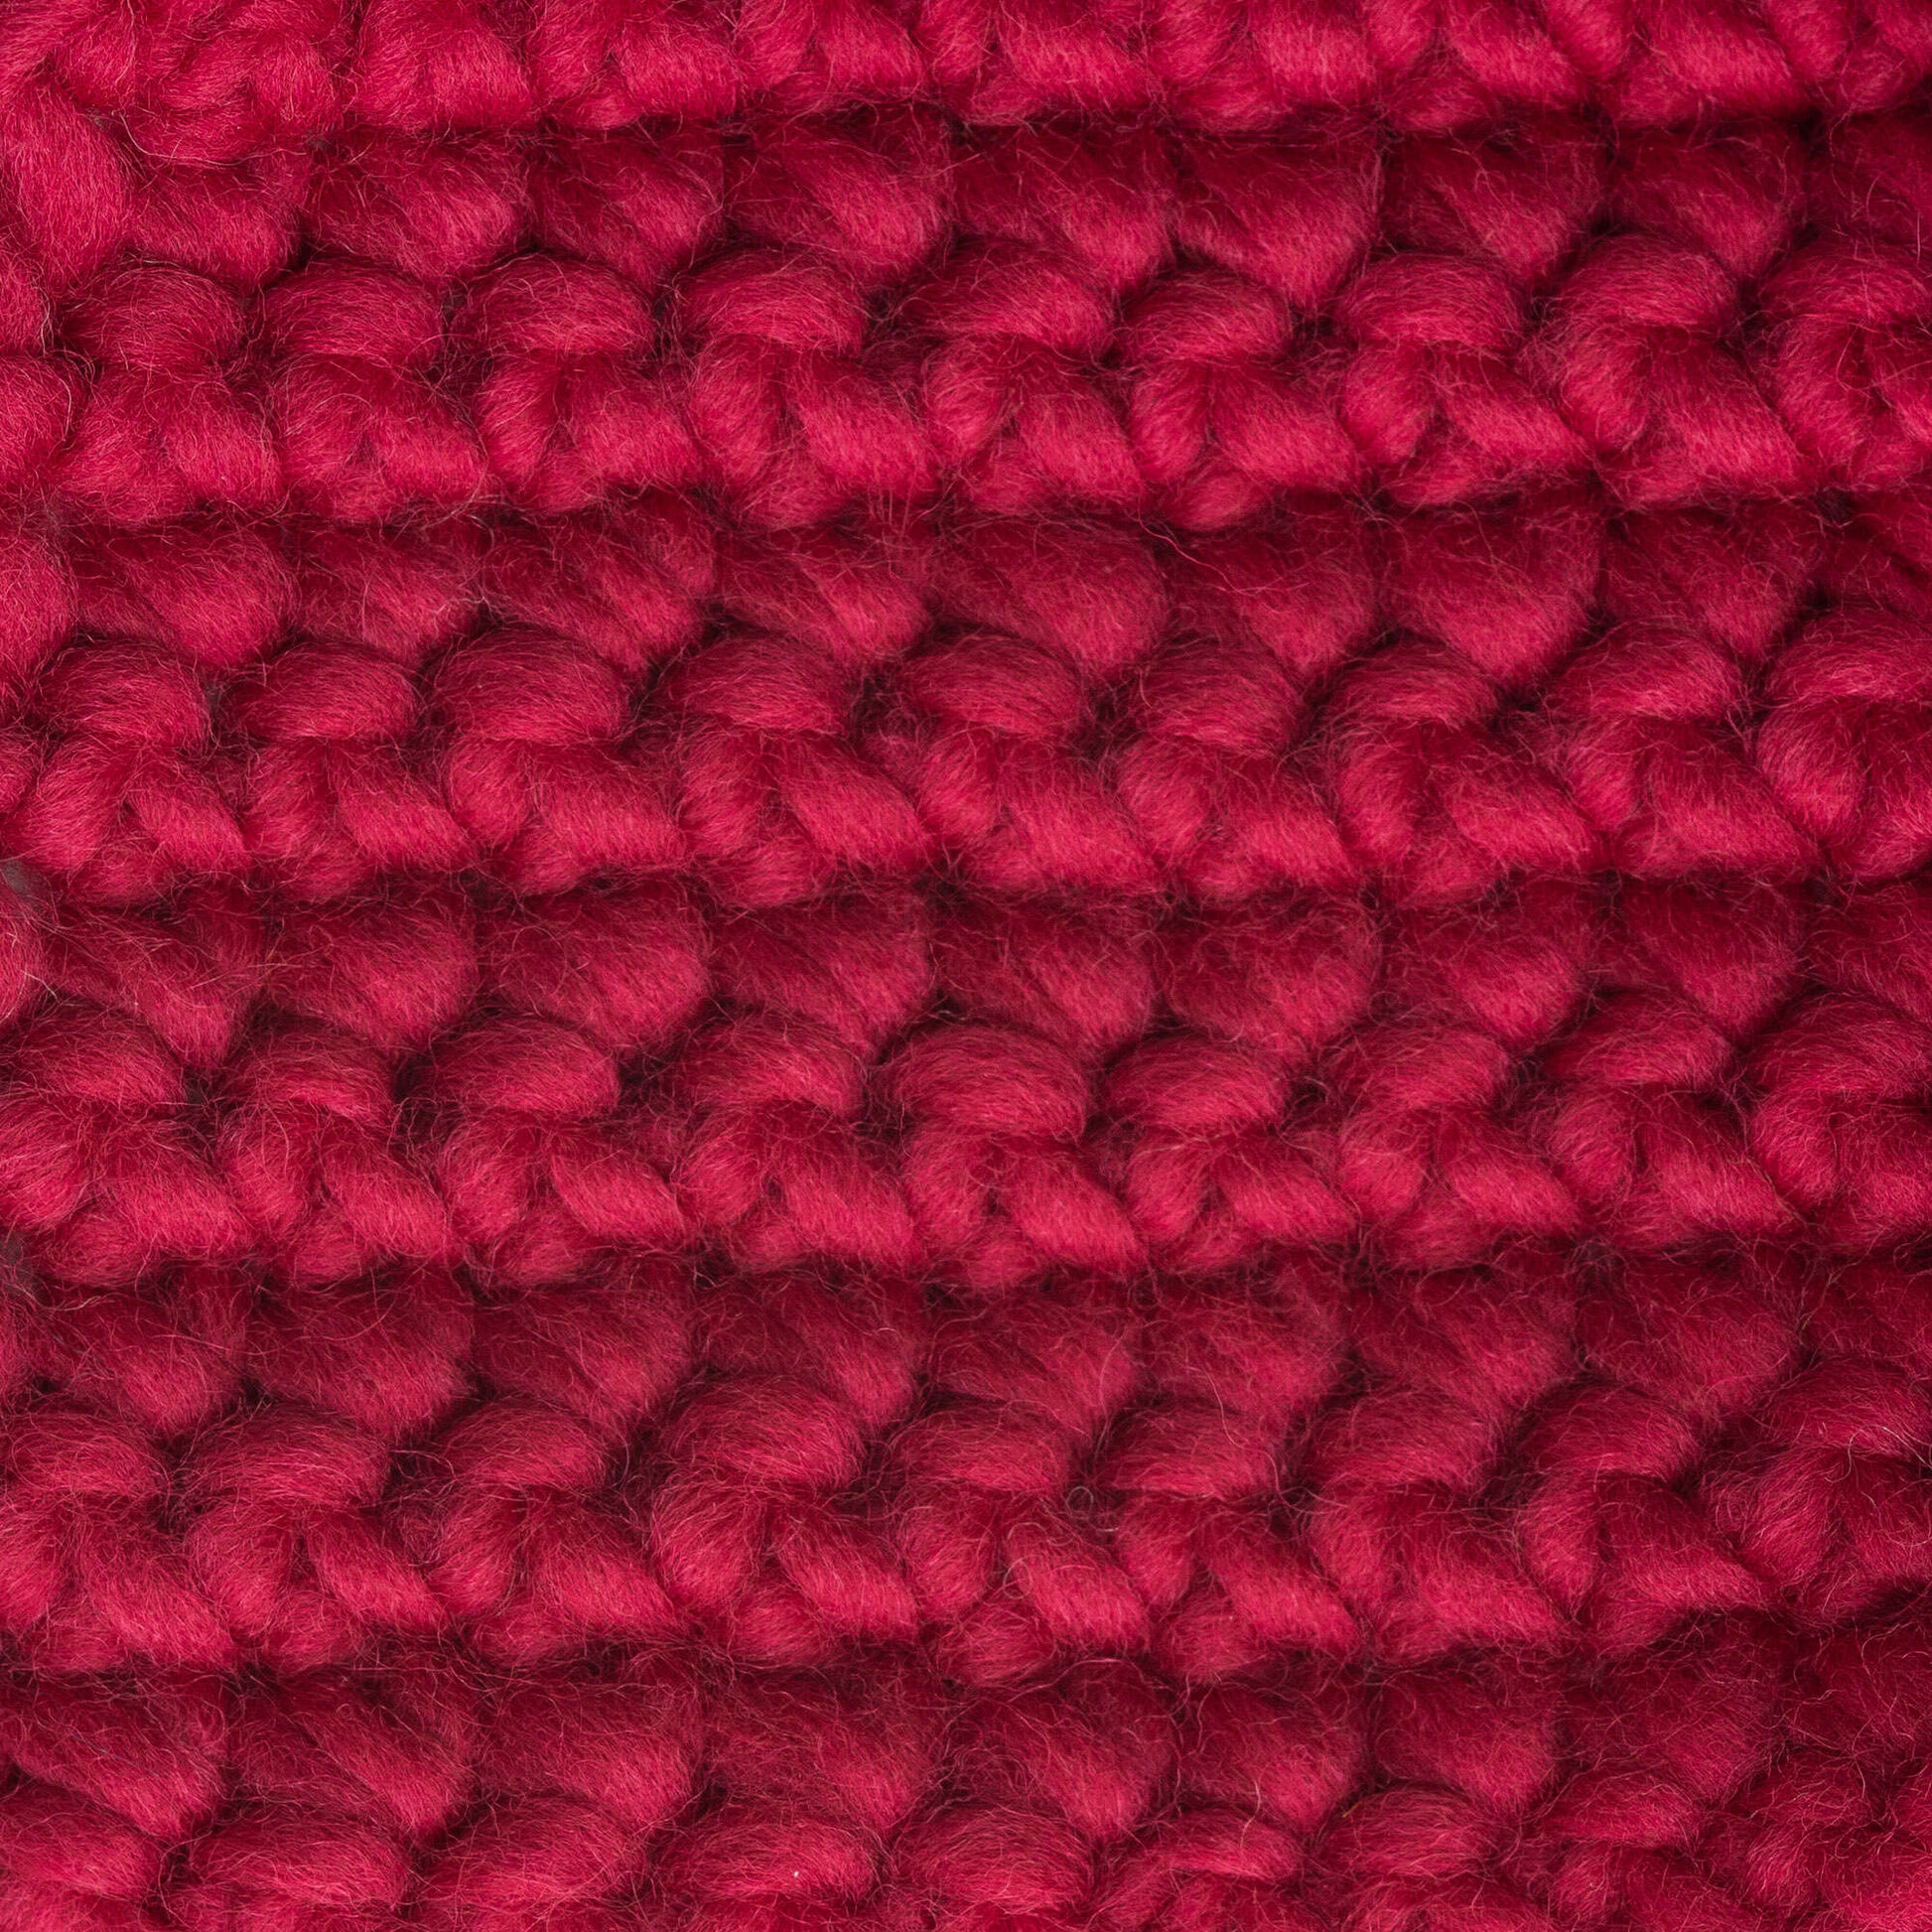 Patons Classic Wool Roving Yarn - Cherry